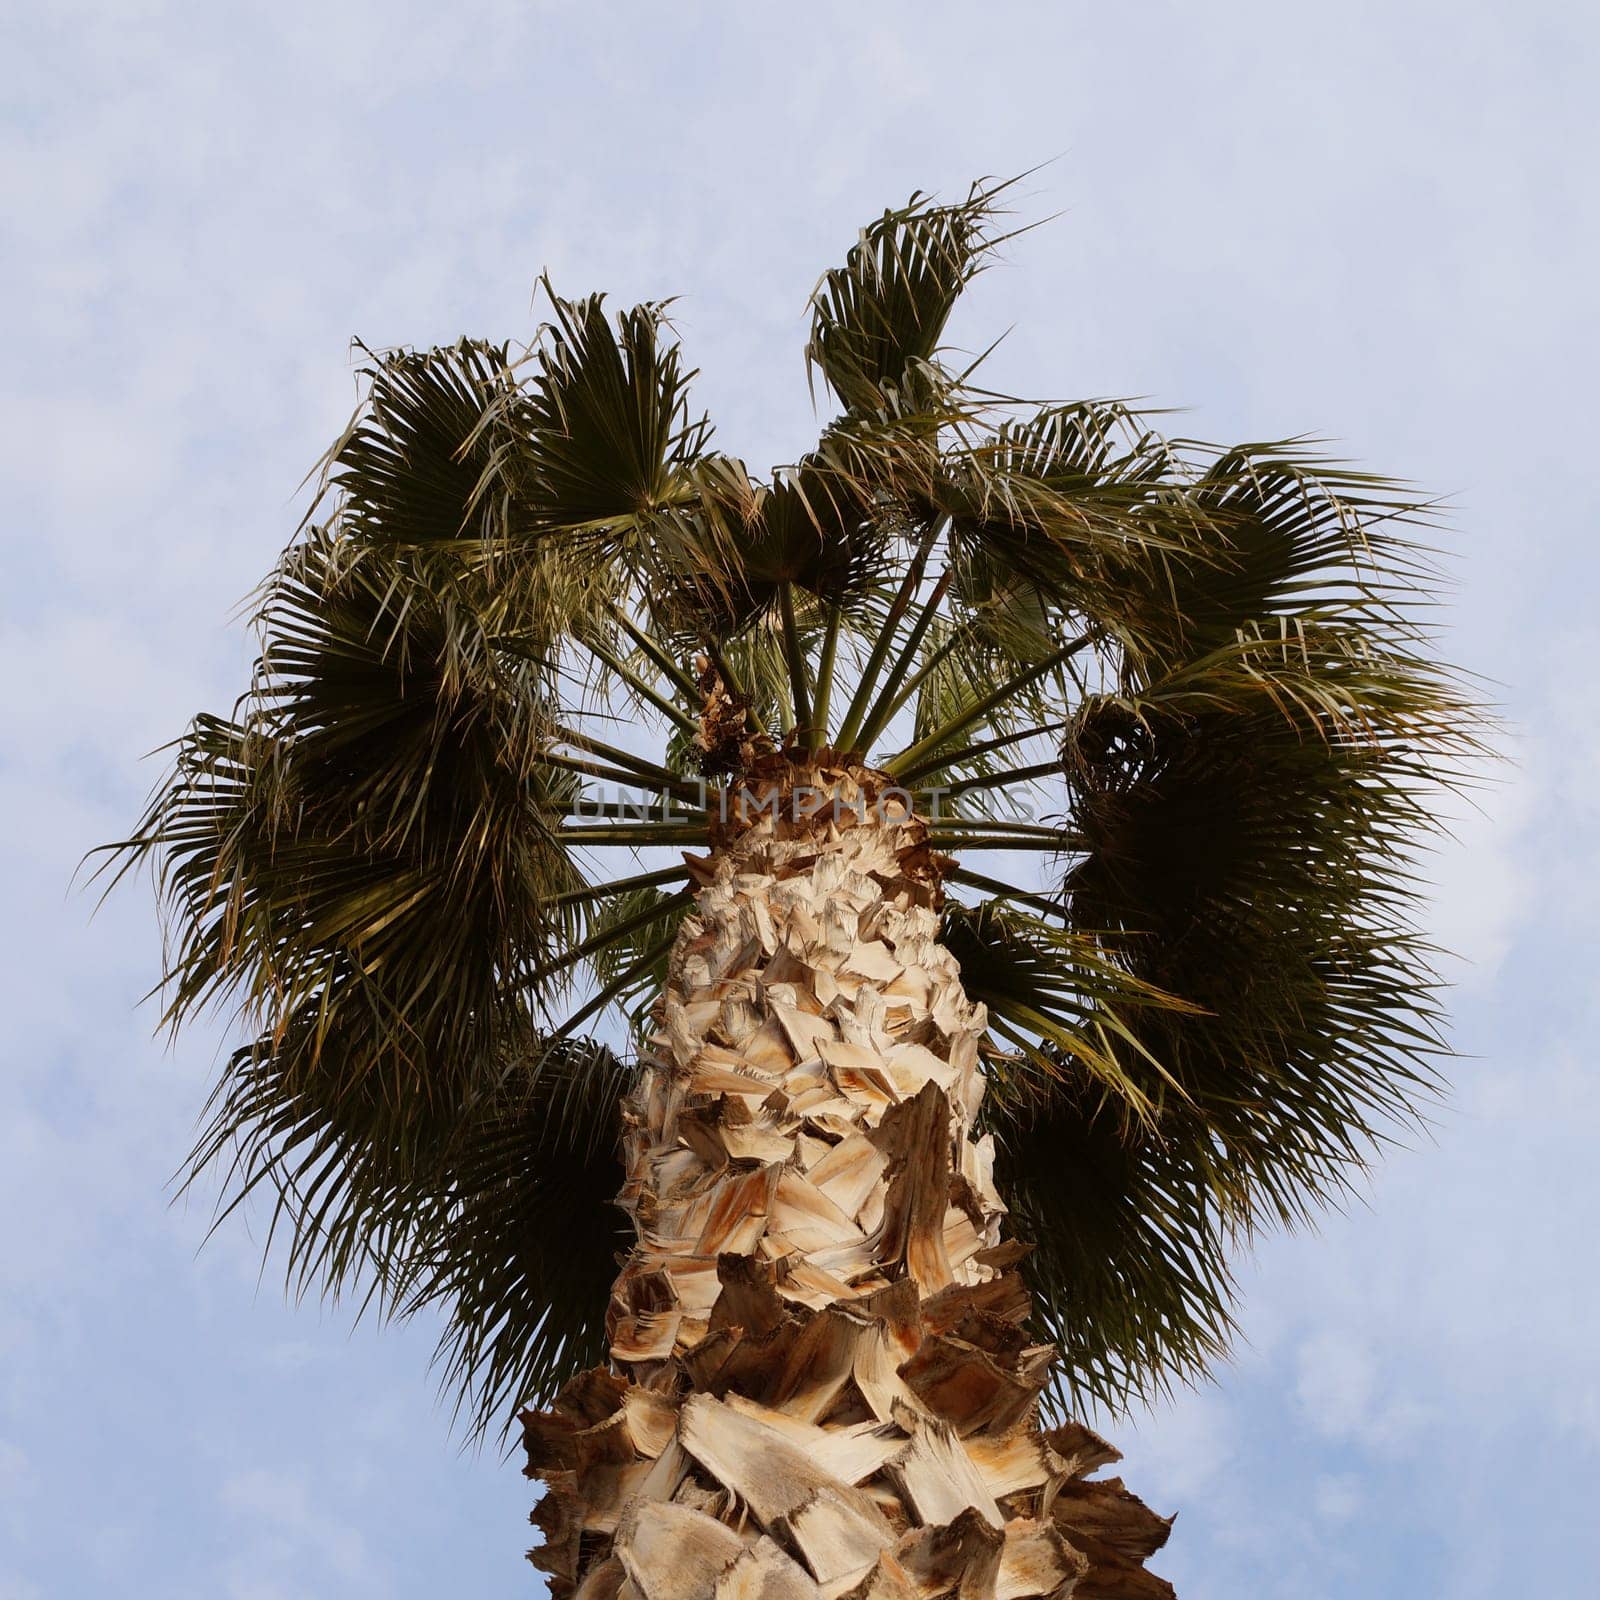 Washingtonia palm against a cloudy sky, bottom view by Annado